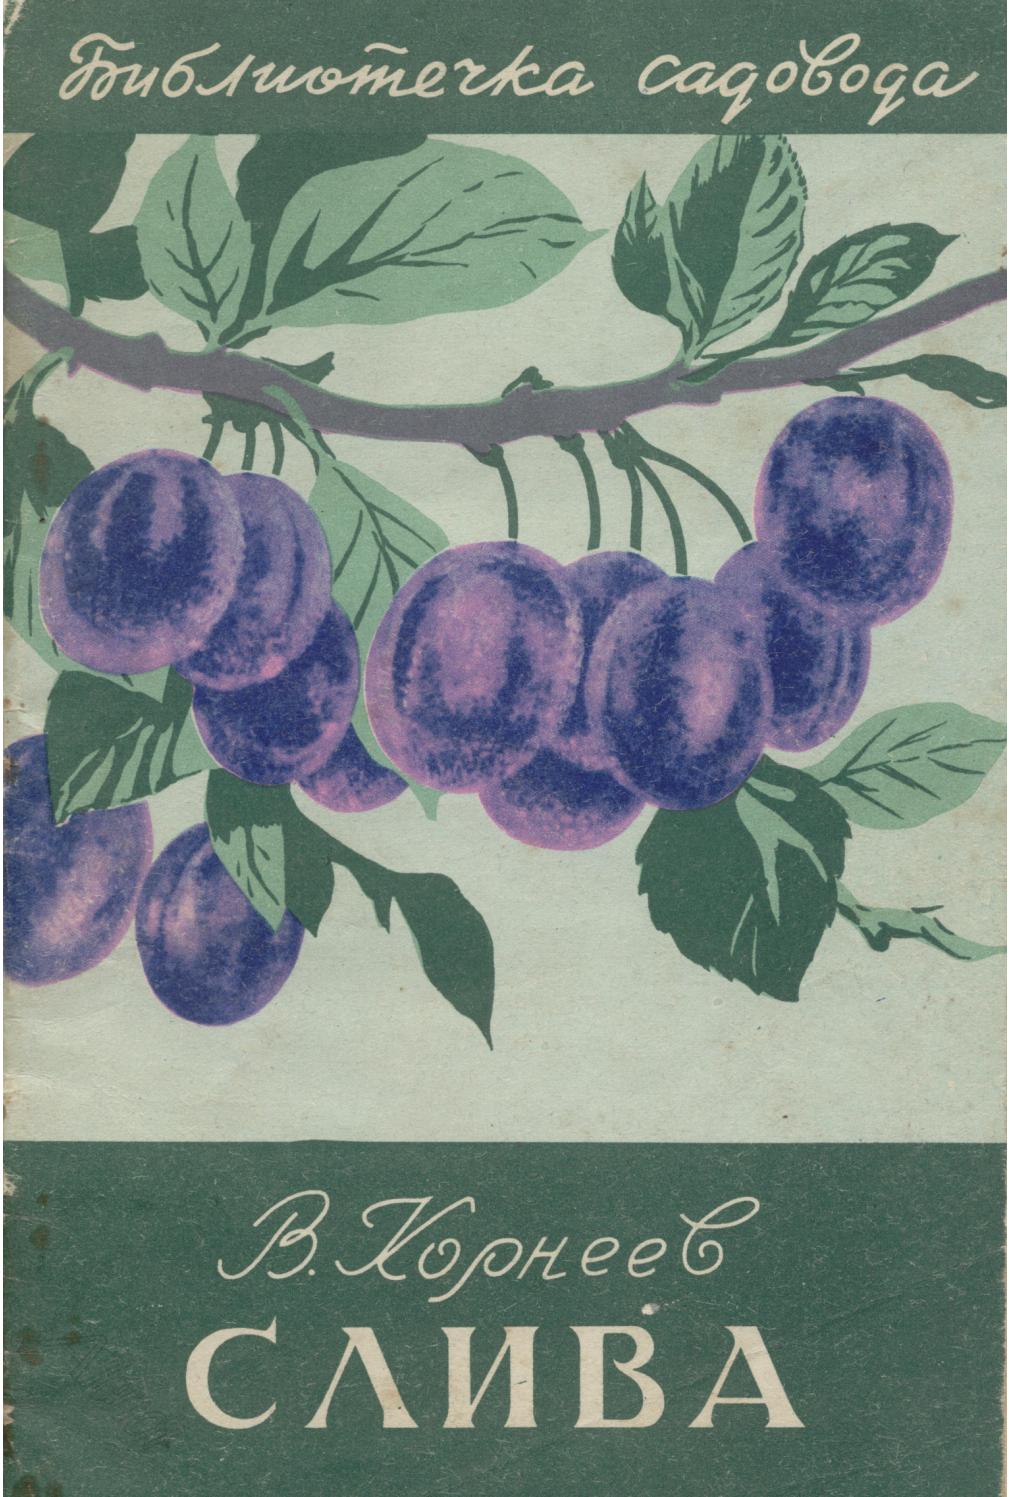 Слива (Библиотечка садовода) - 1960 ссср